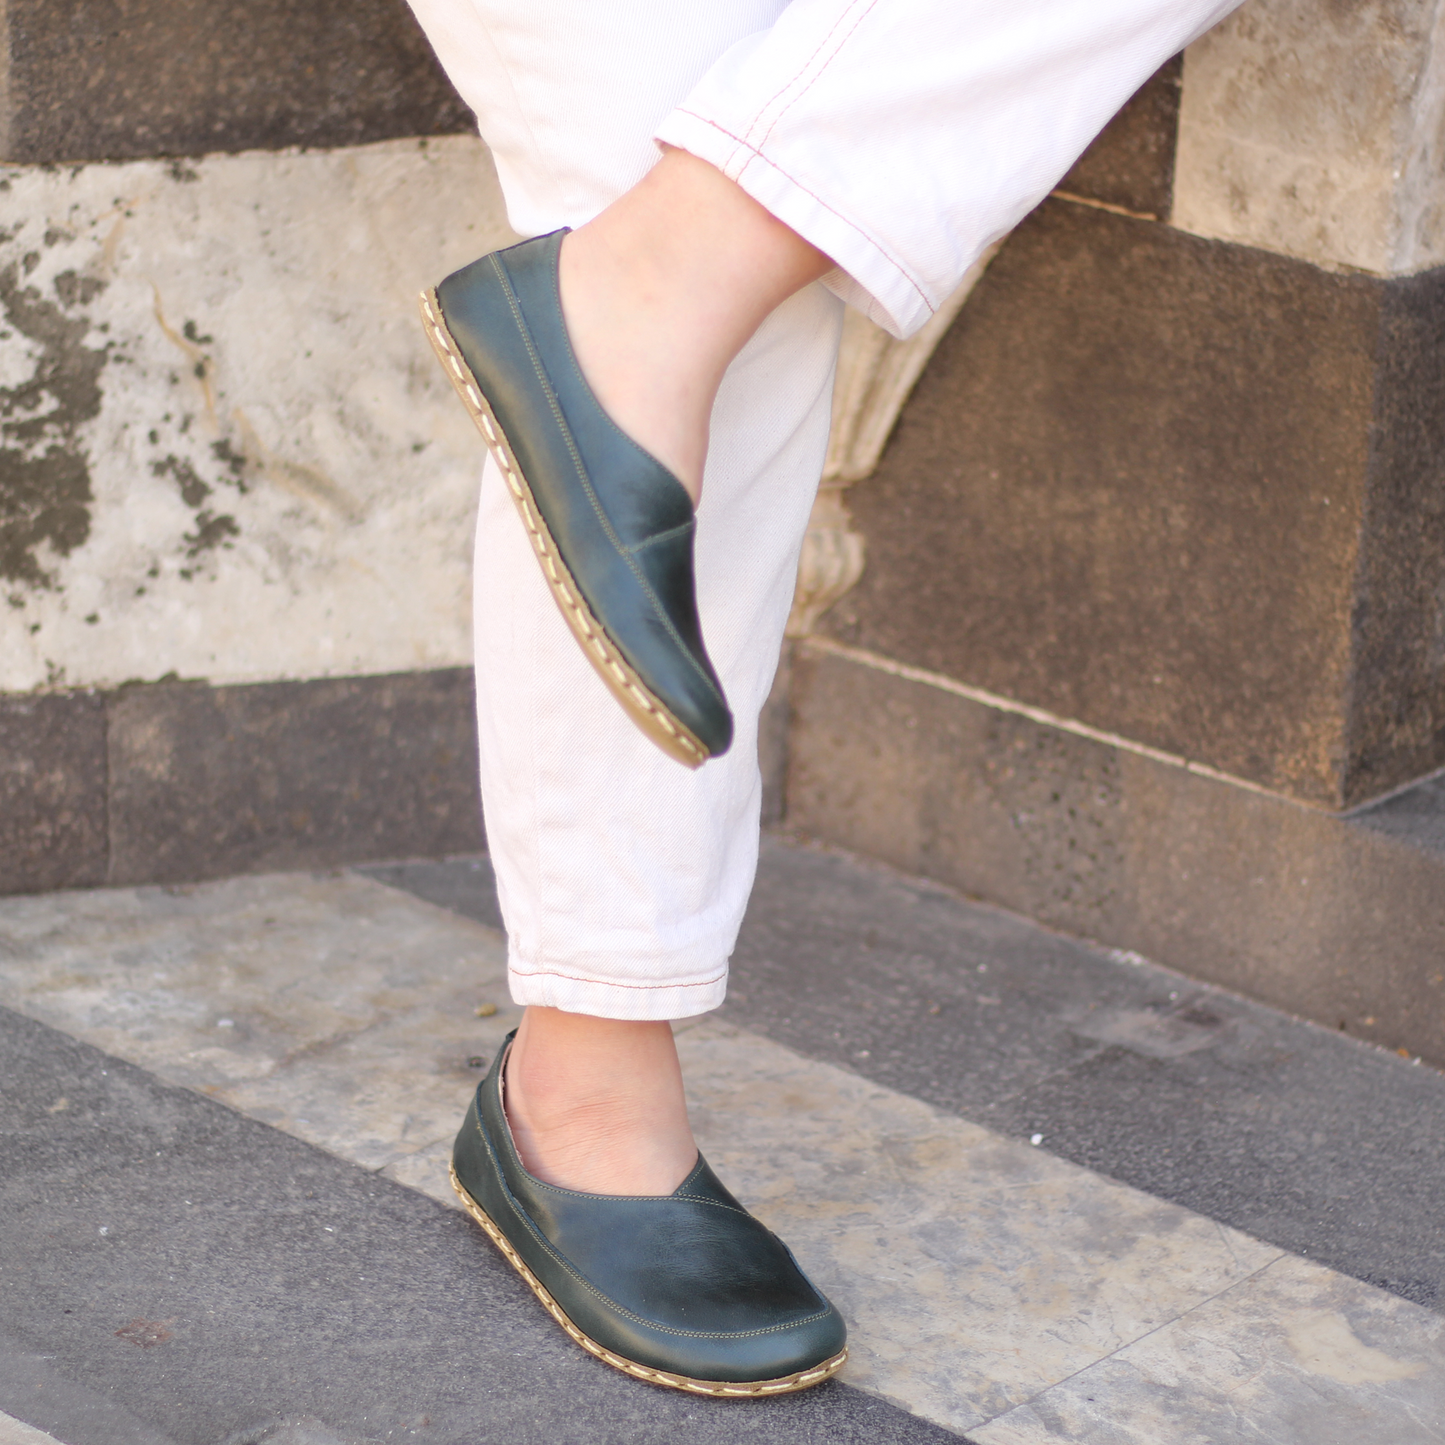 Women's Handmade Toledo Green Barefoot Leather Loafers